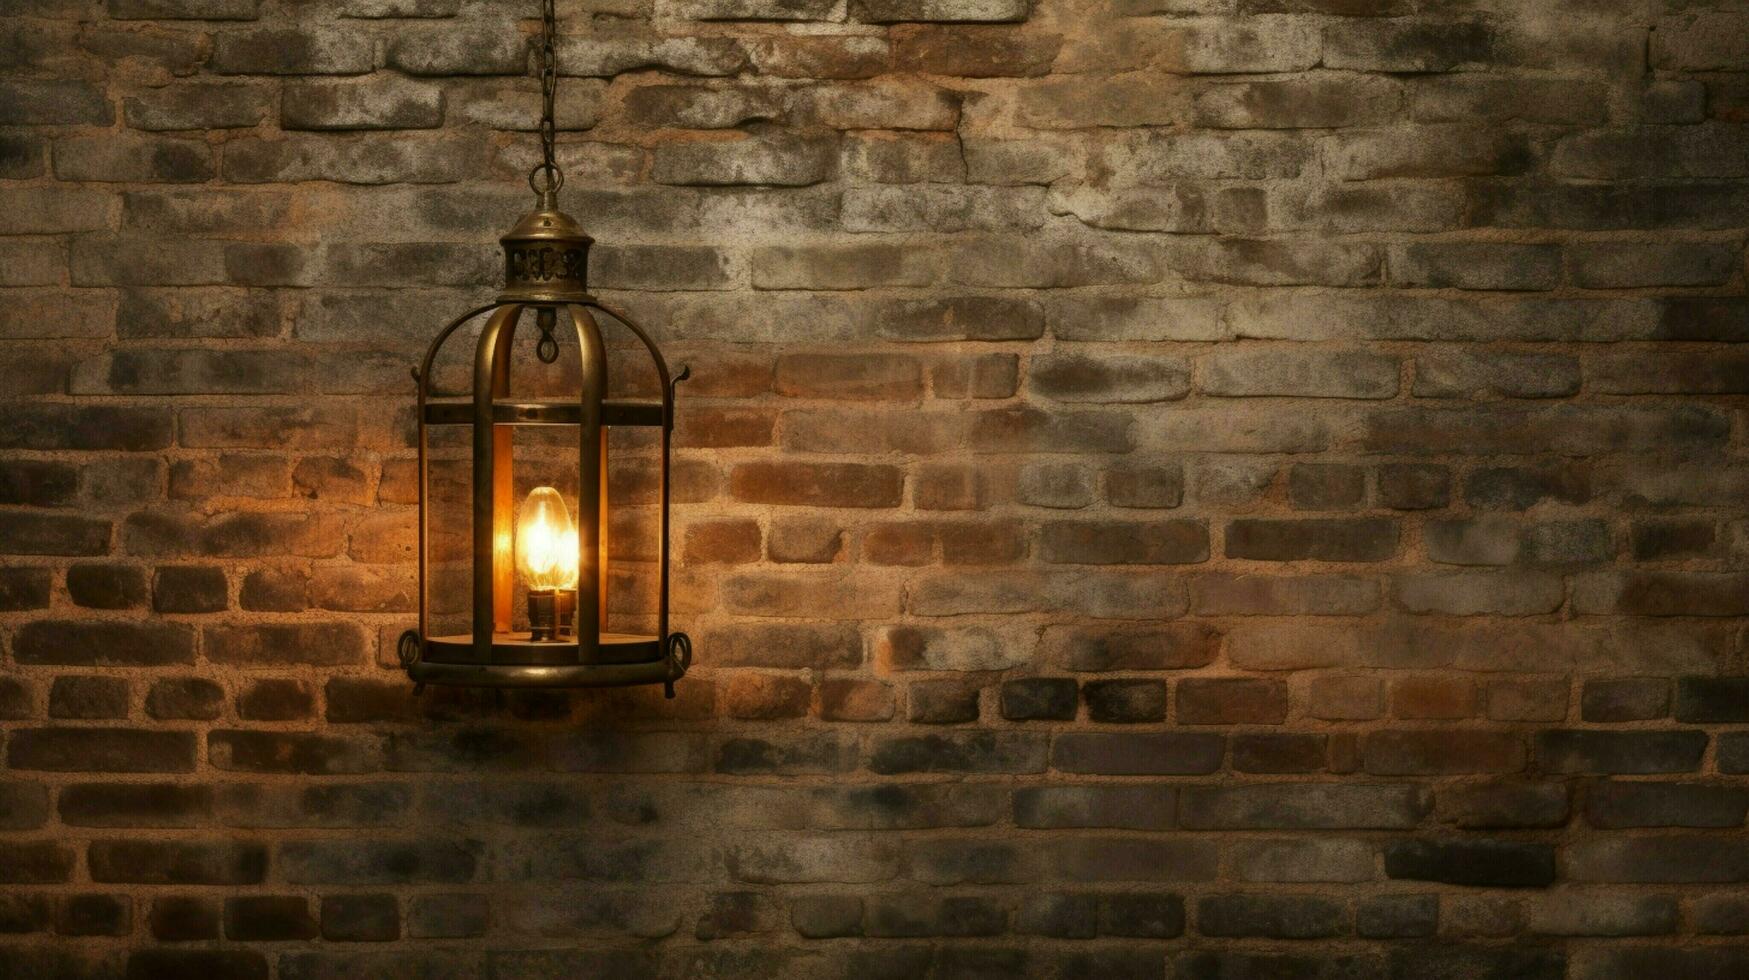 Antiguidade lanterna ilumina rústico tijolo parede foto